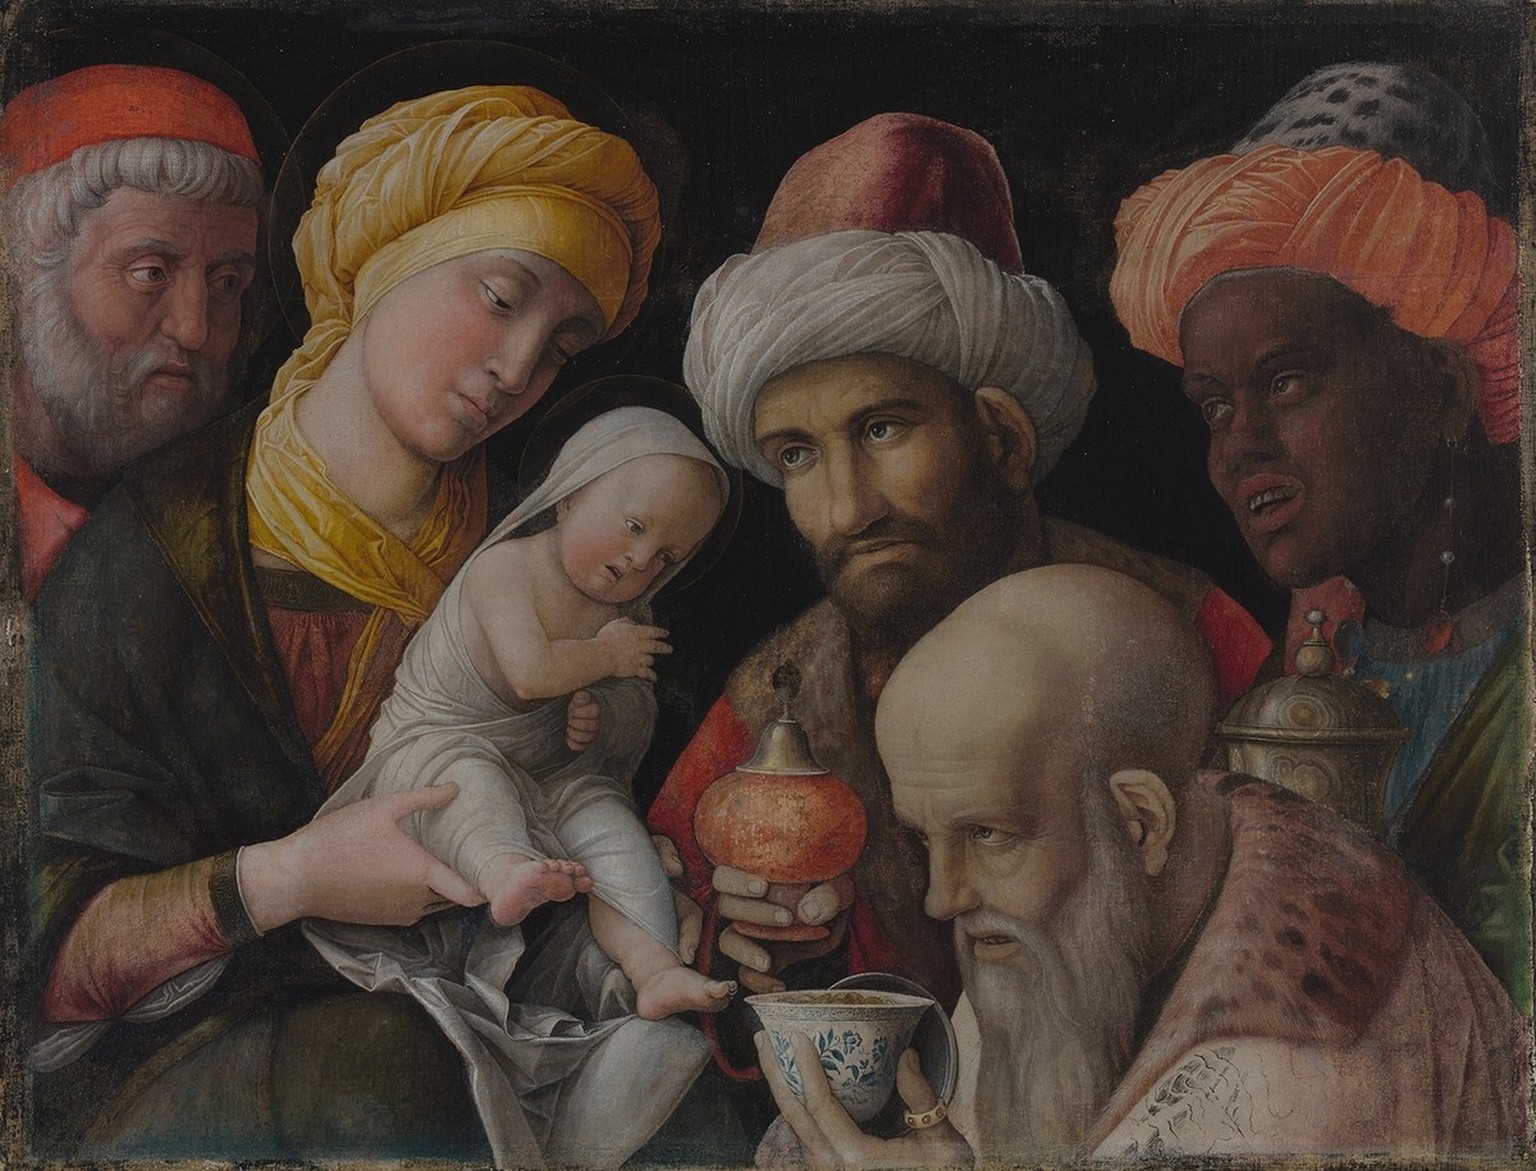 Anbetung der Könige von Andrea Mantegna, um 1495-1505.
https://commons.wikimedia.org/wiki/File:Mantegna_Magi.jpg